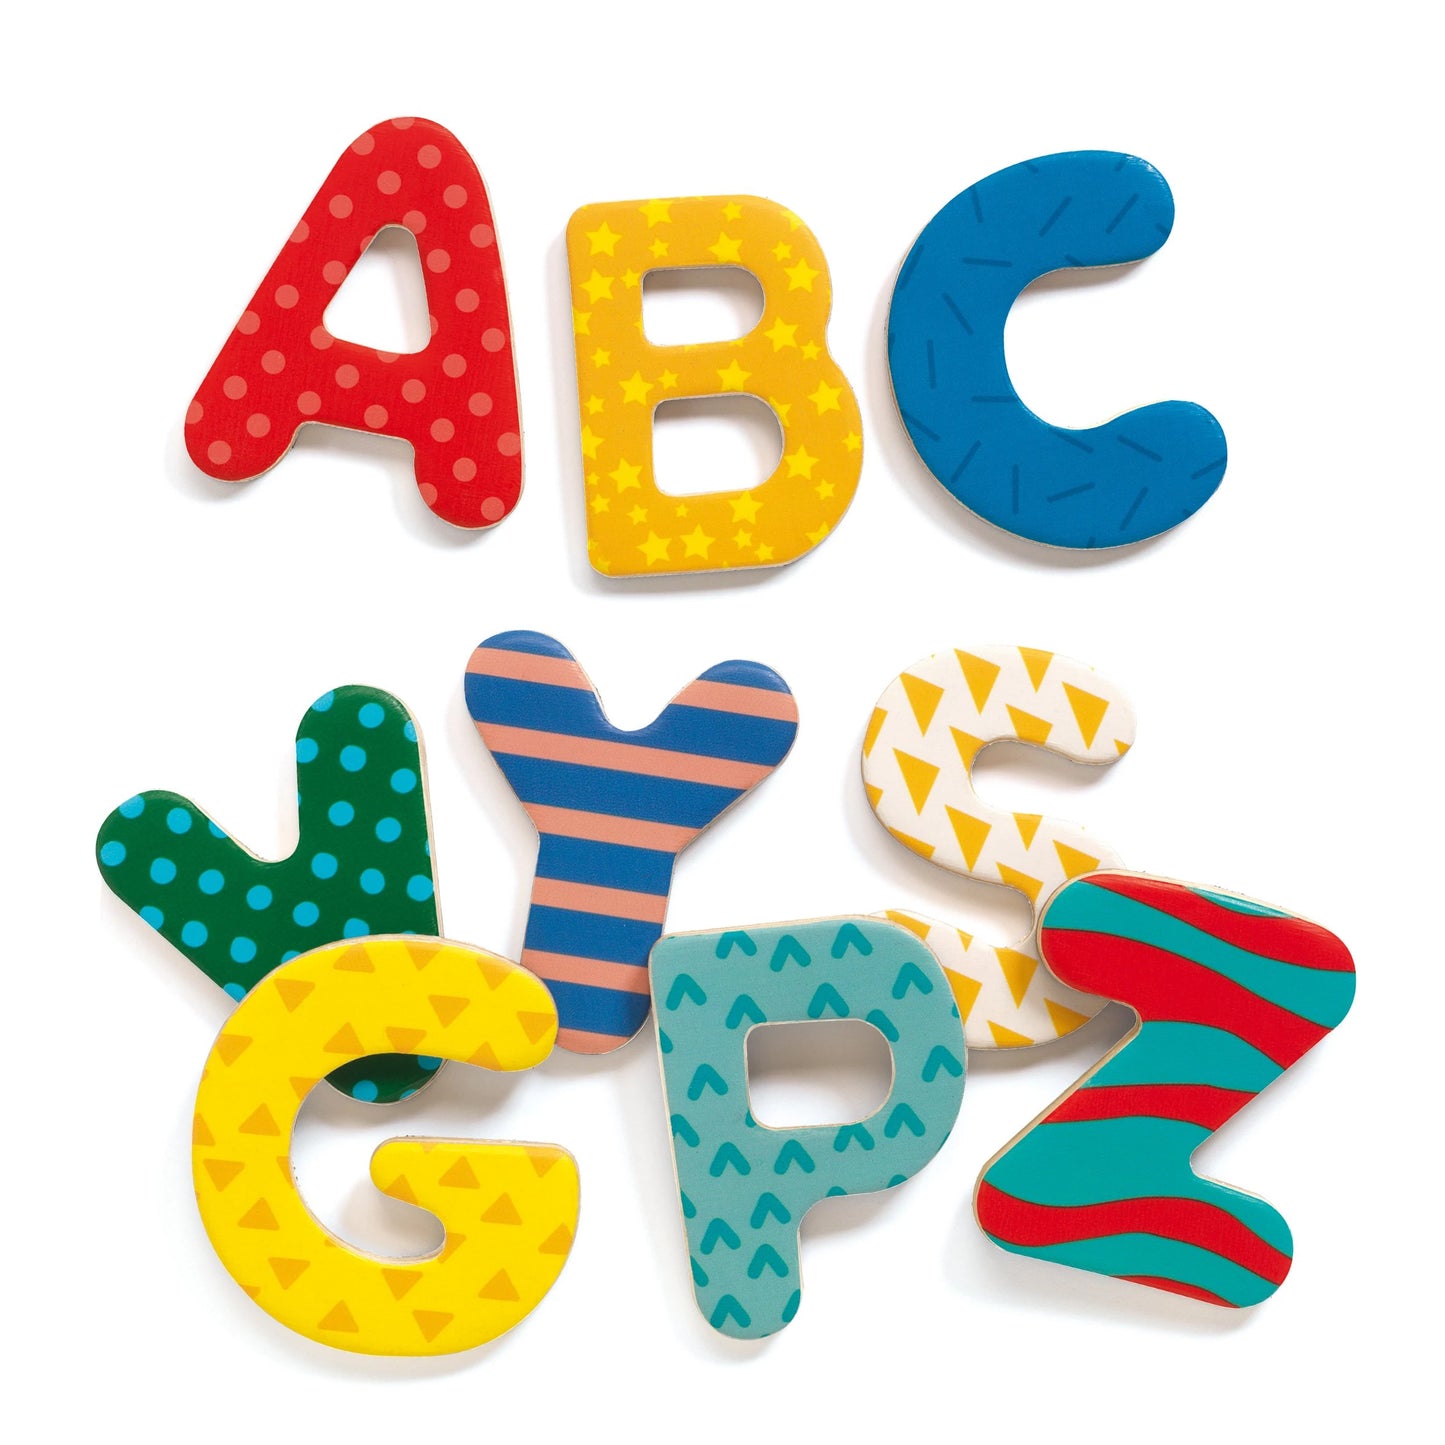 Alphabet Wooden Magnets | 38 Big Letters